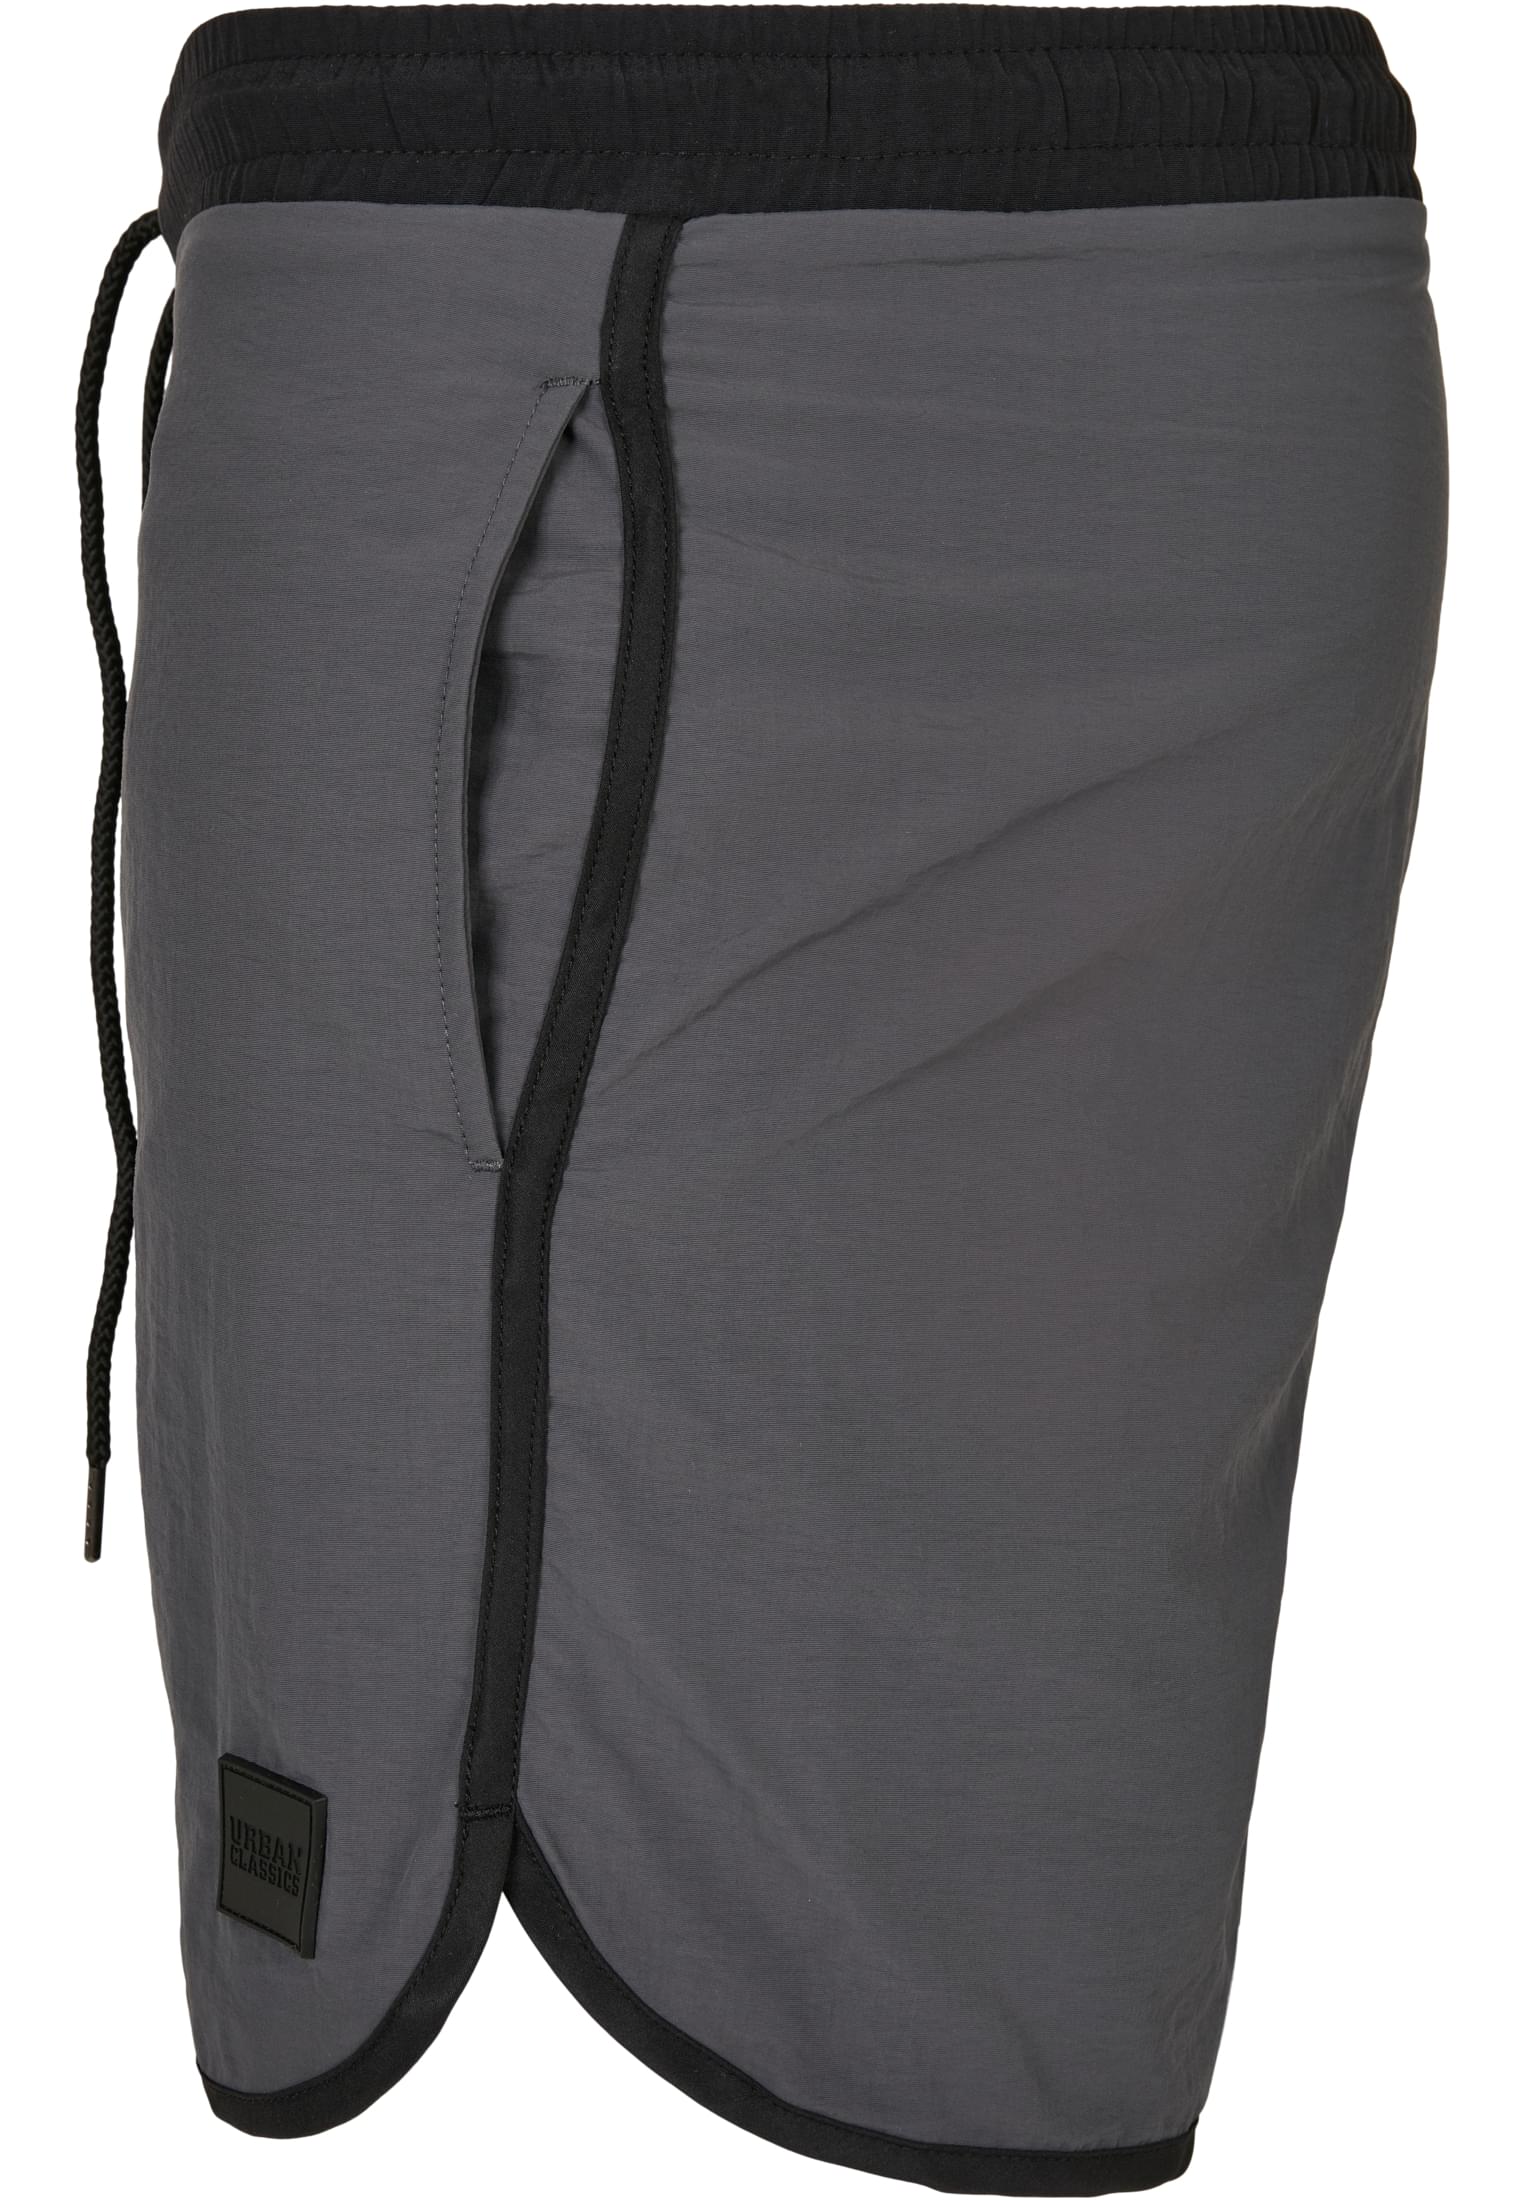 Plus Size Retro Swimshorts in Farbe black/darkshadow